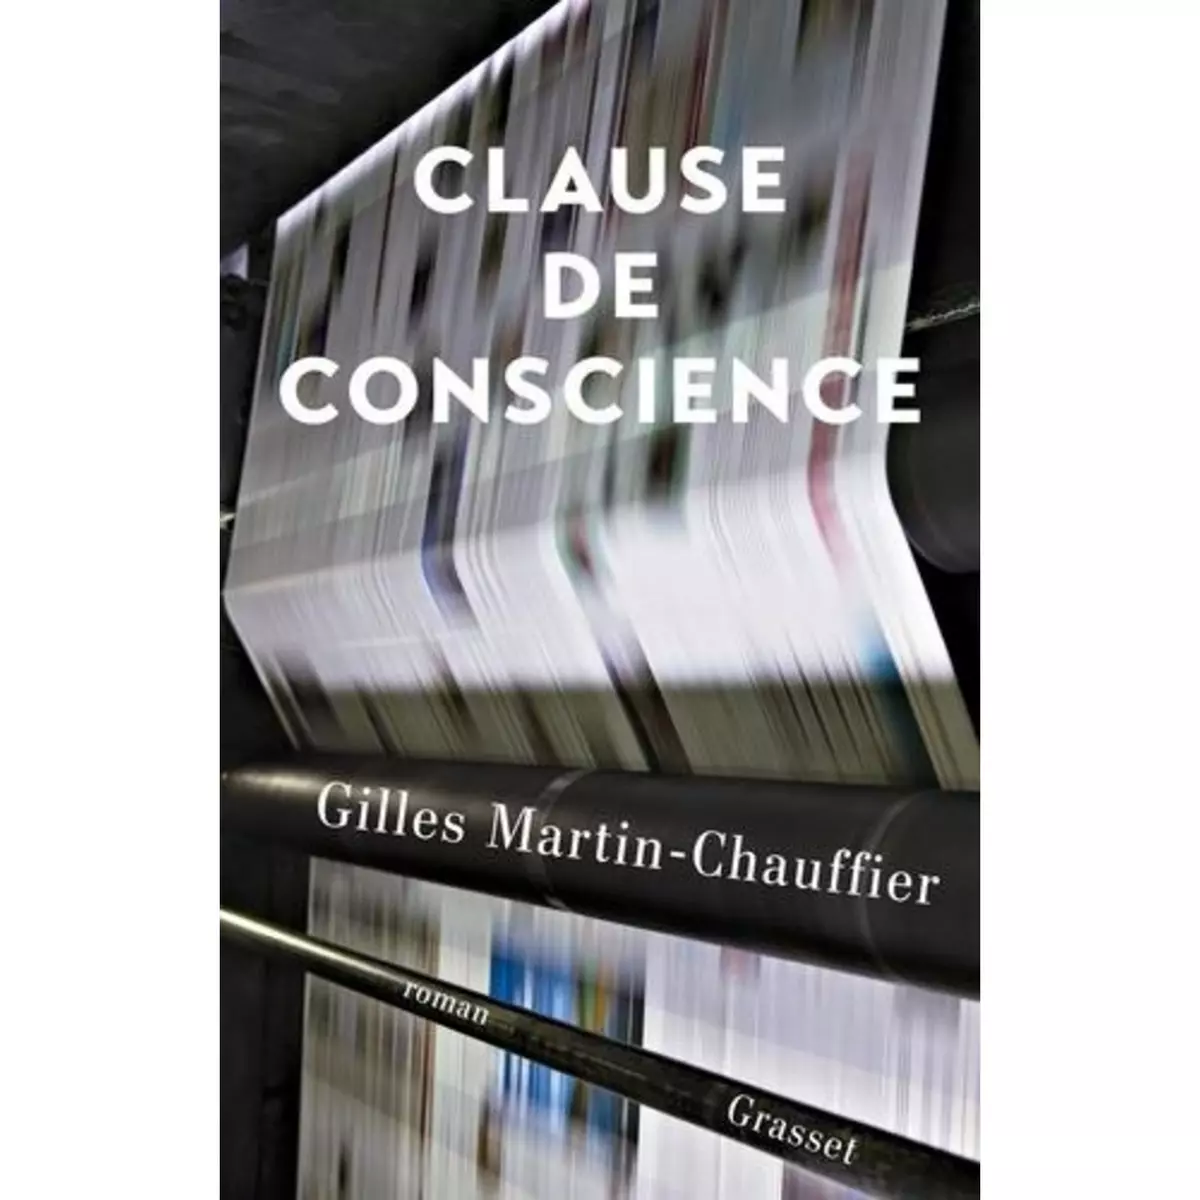  CLAUSE DE CONSCIENCE, Martin-Chauffier Gilles